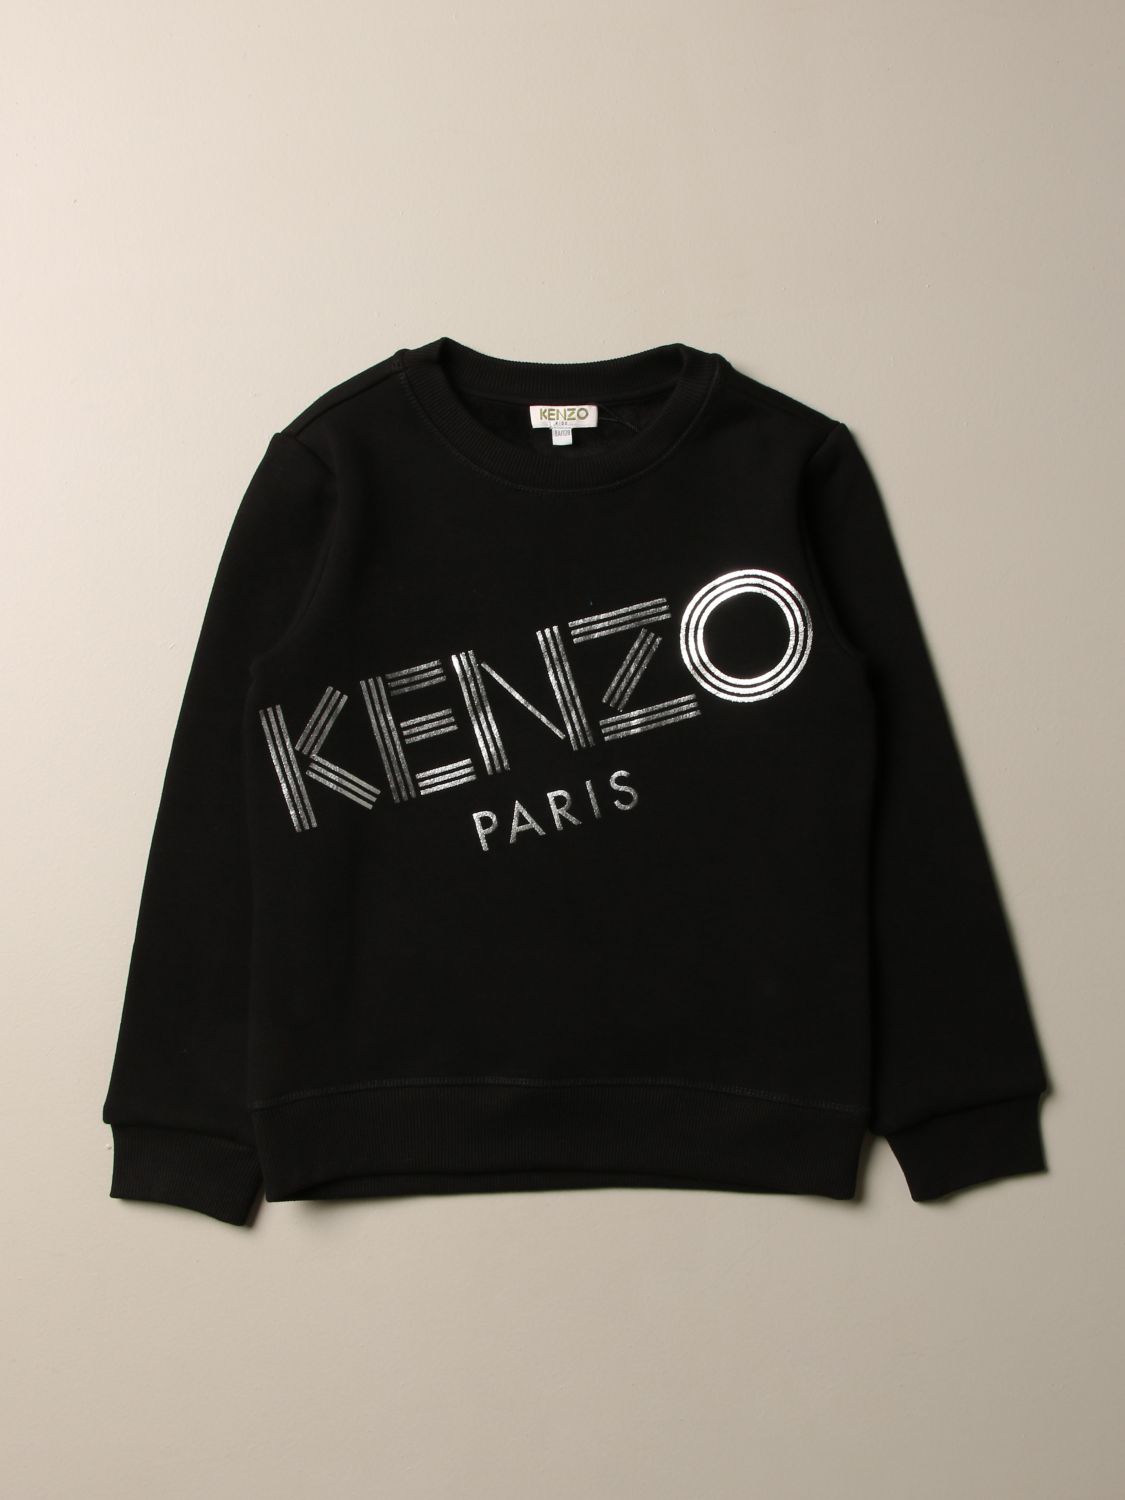 kenzo sweater kids